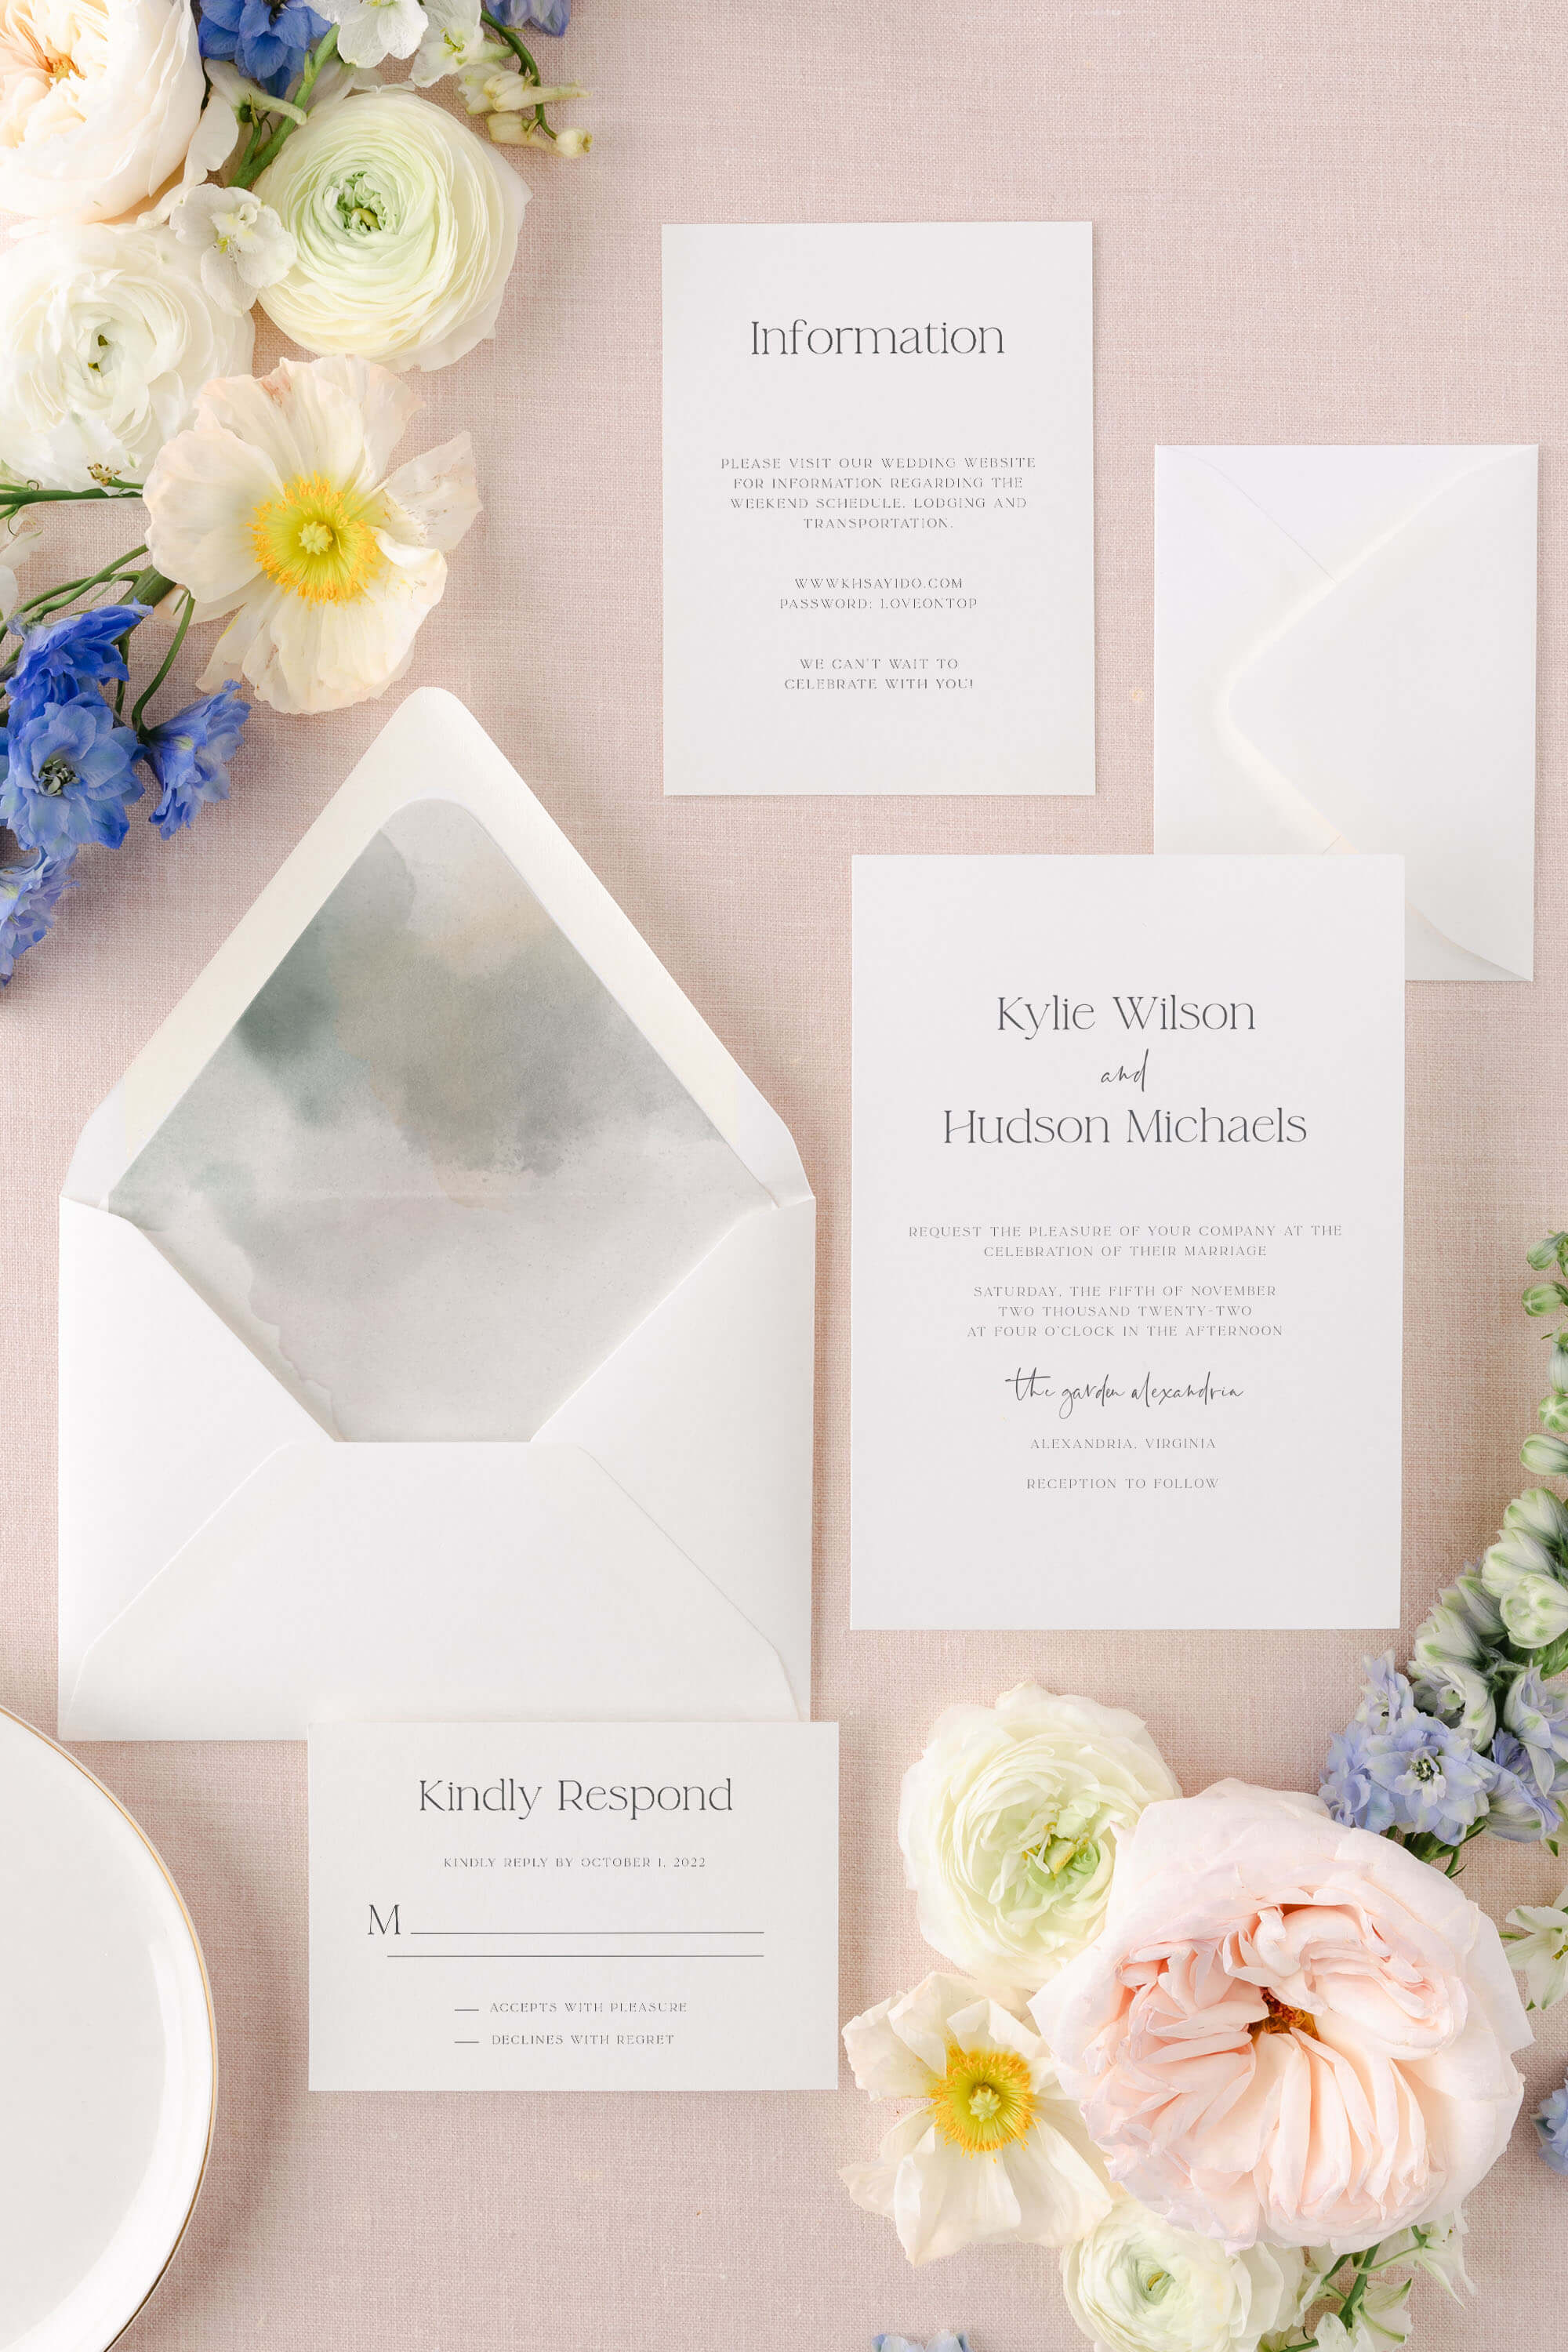 Letterpress Wedding Invitations